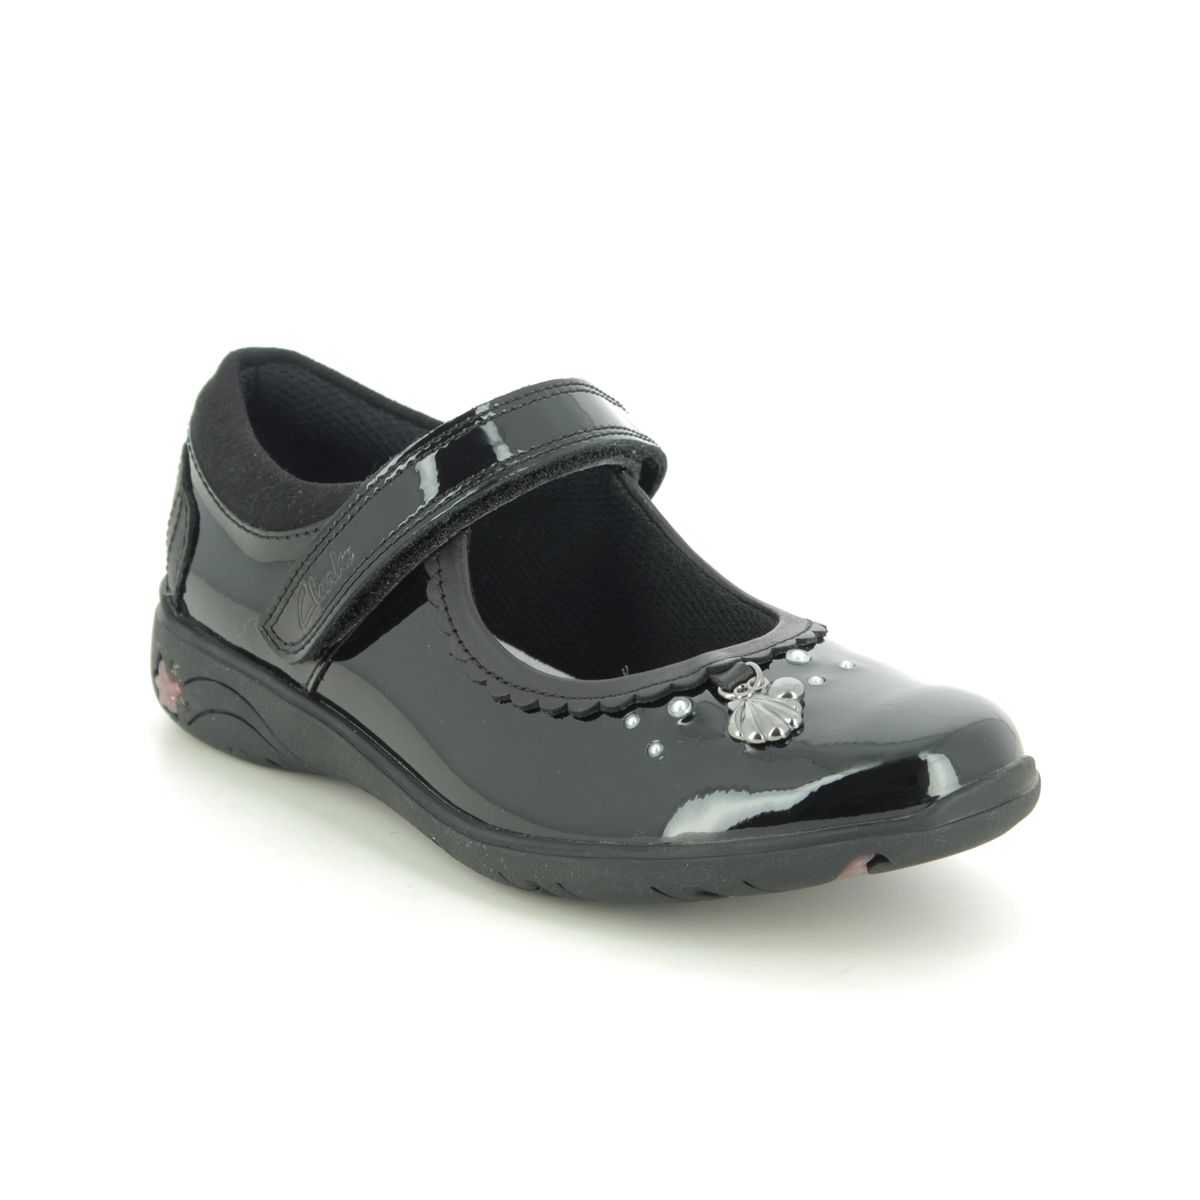 Clarks Sea Shimmer K Black Patent Kids Girls School Shoes 555436F In Size 2.5 In Plain Black Patent F Width Fitting Regular Fit For School For kids